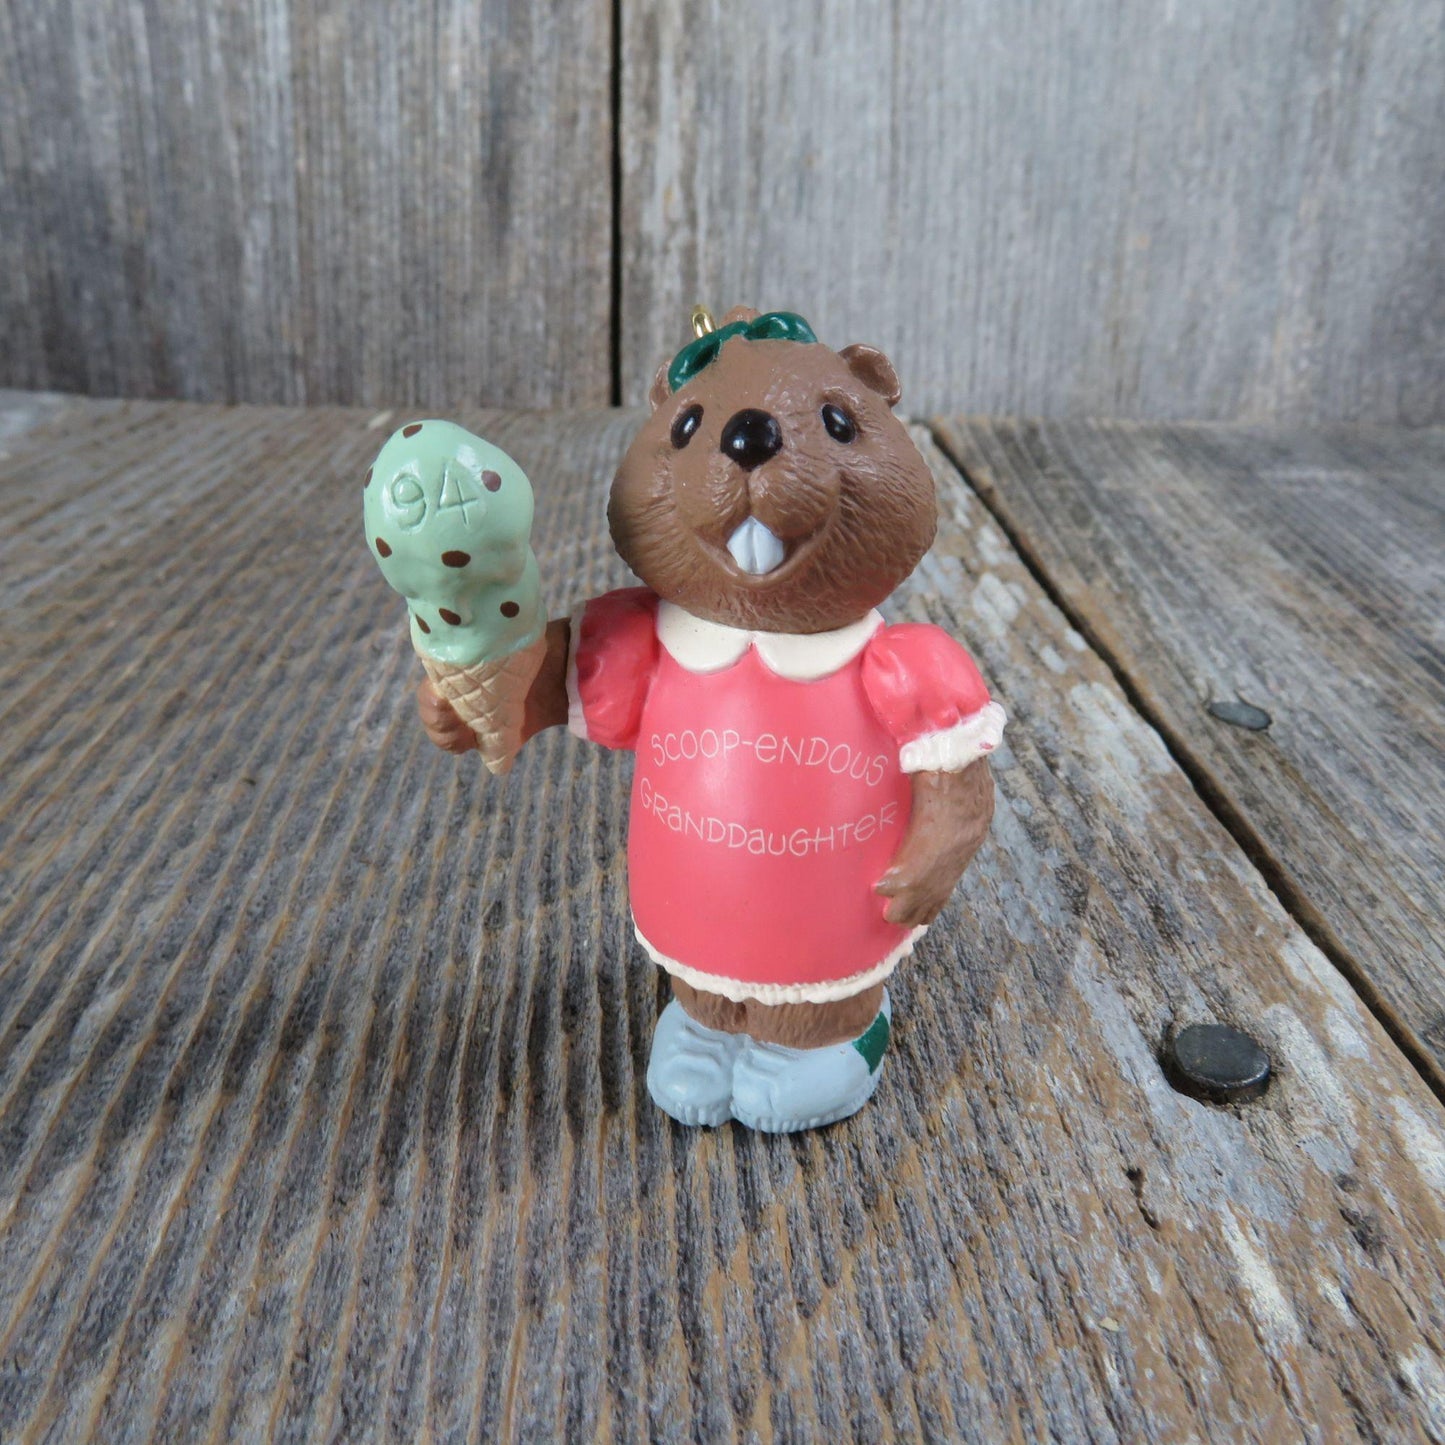 Vintage Beaver Girl with Ice Cream Ornament Scoop-Endous Granddaughter Hallmark 1994